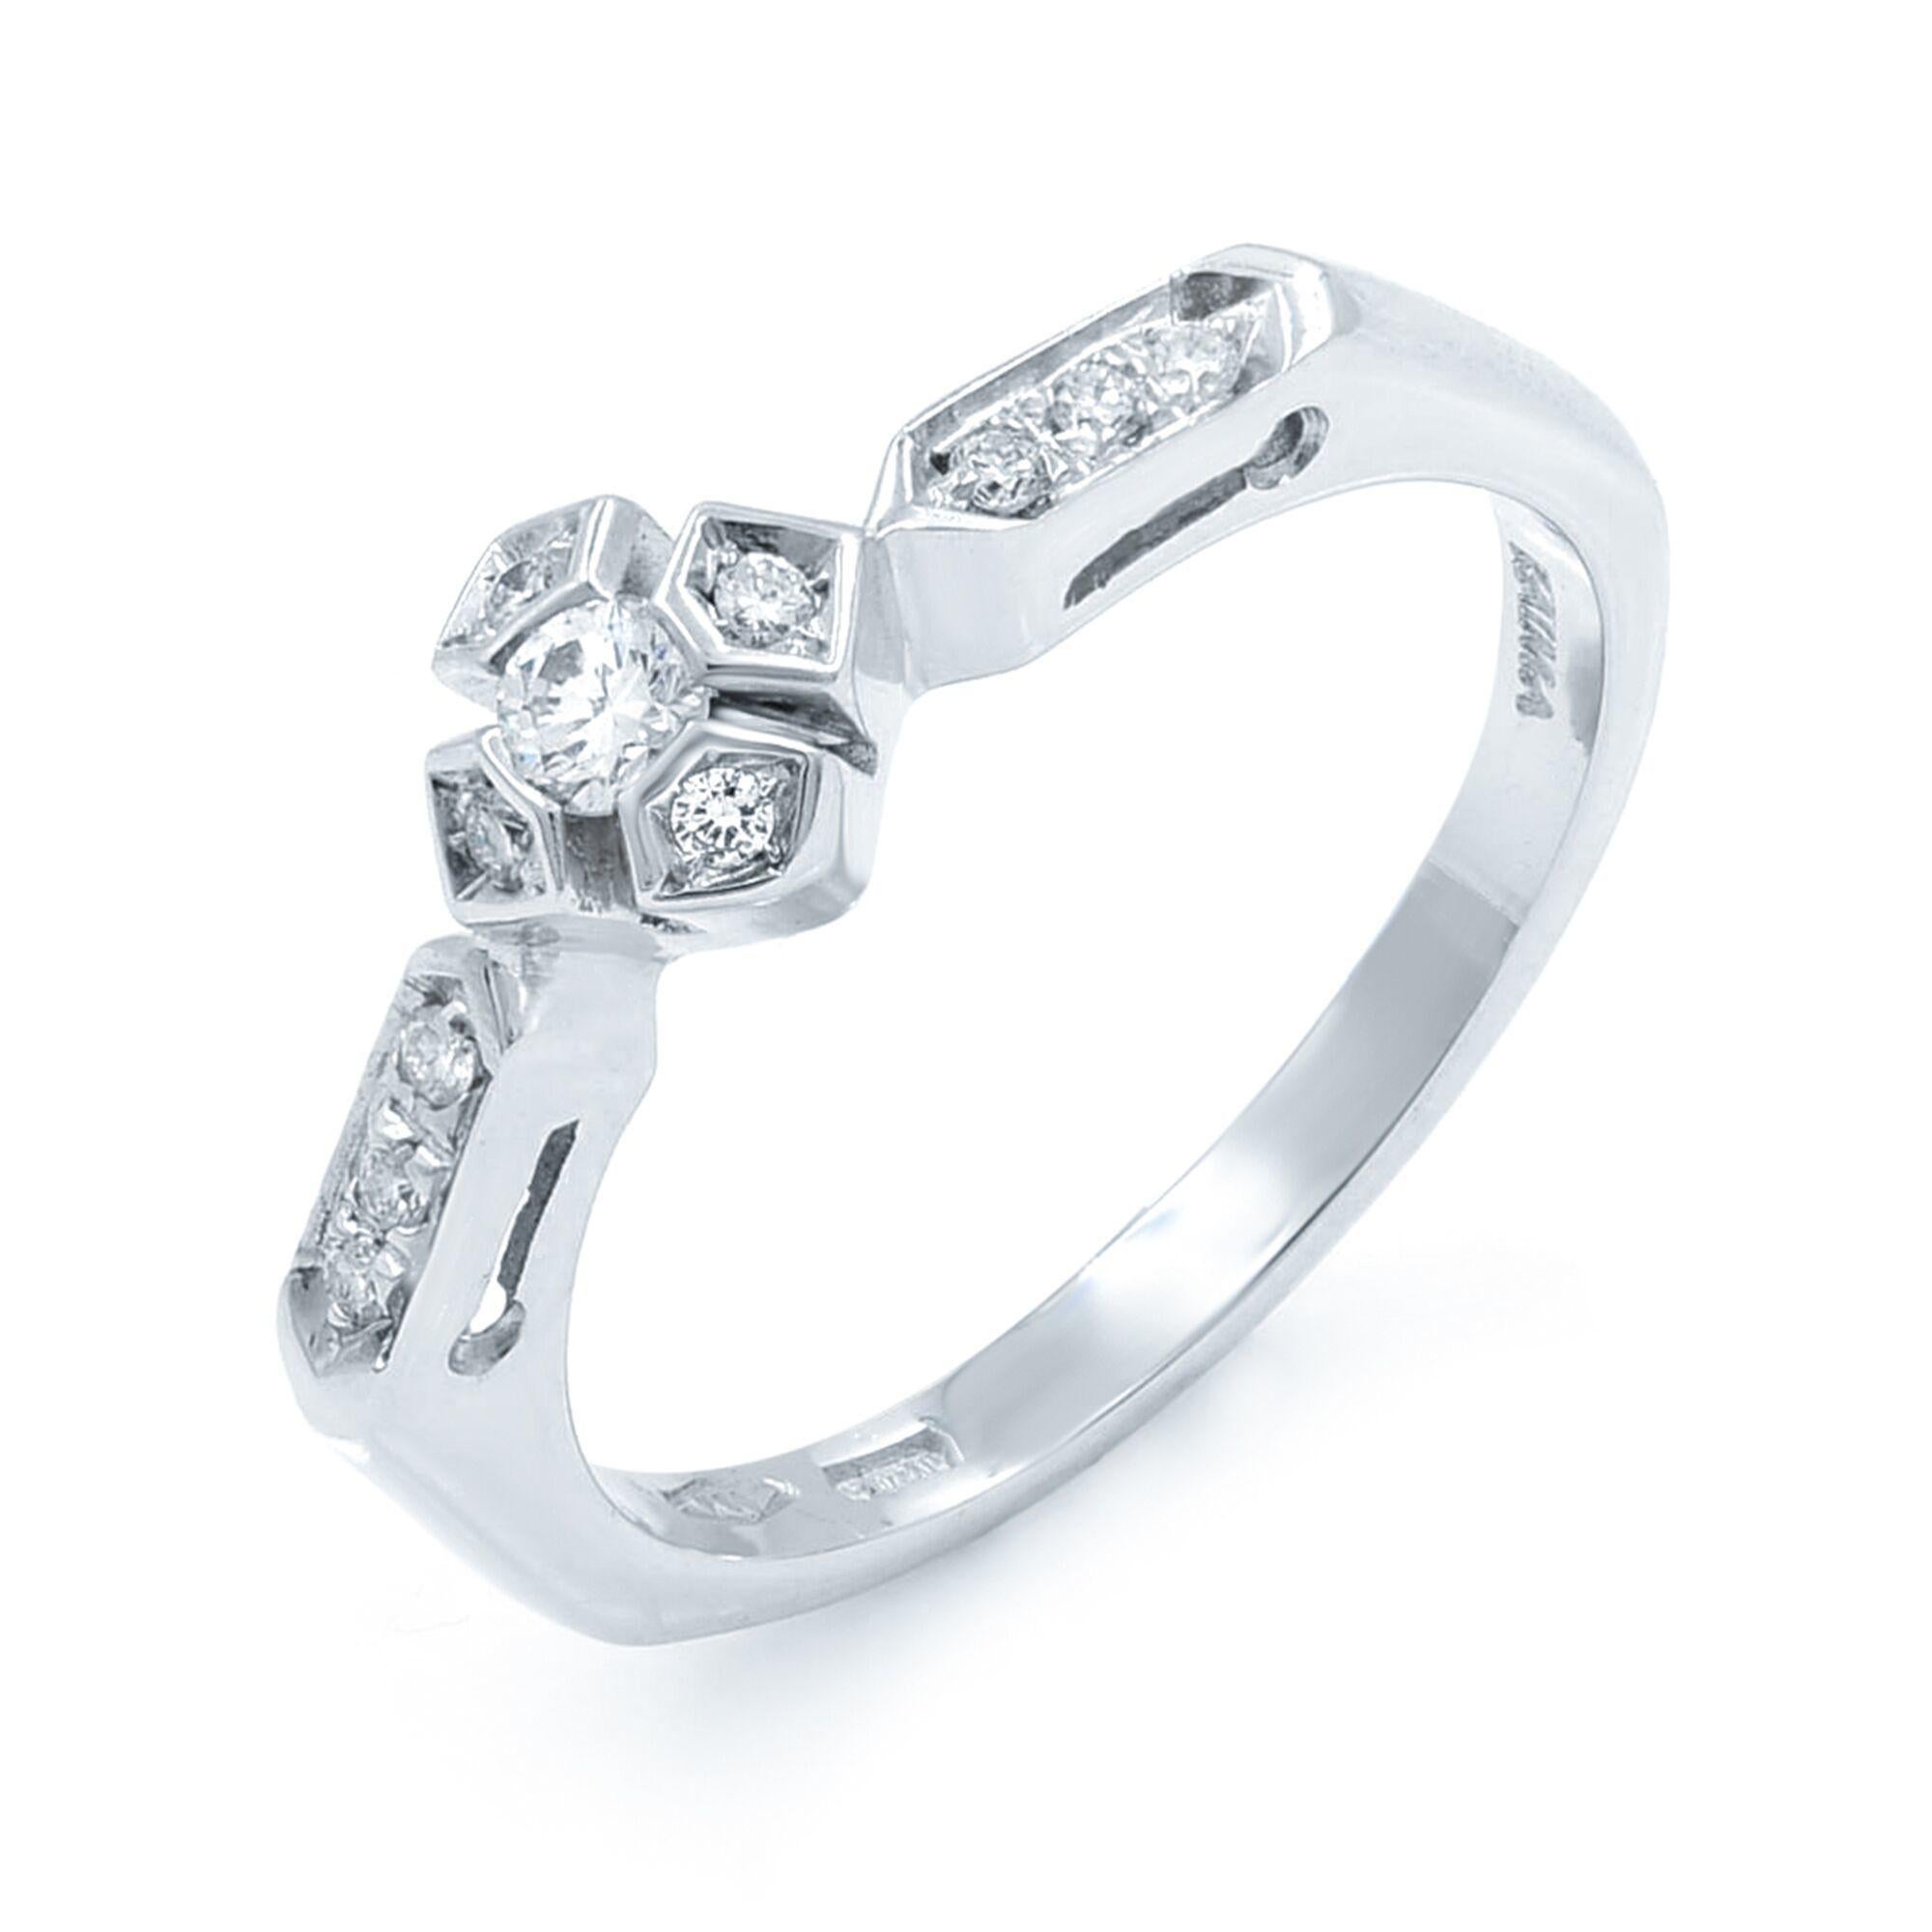 Round Cut Rachel Koen Diamond Accented Ladies Engagement Ring 18K White Gold 0.18Cttw For Sale